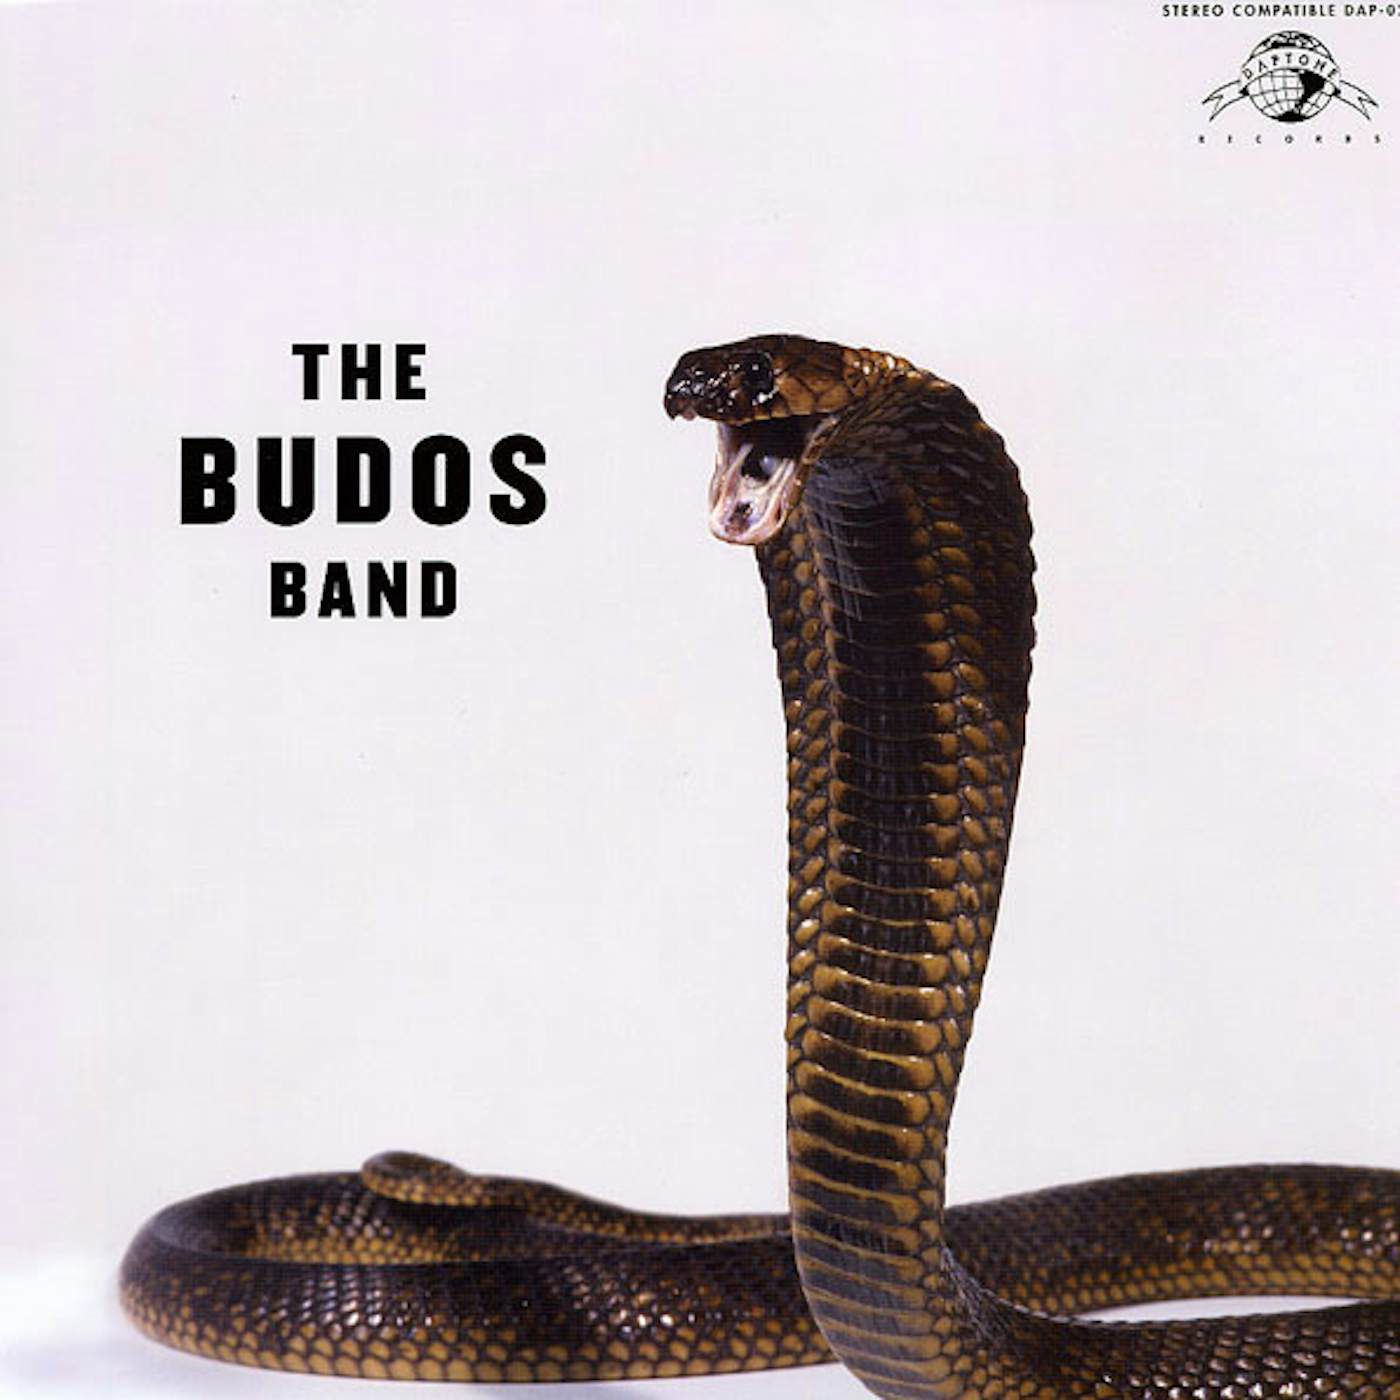 The Budos Band III Vinyl Record